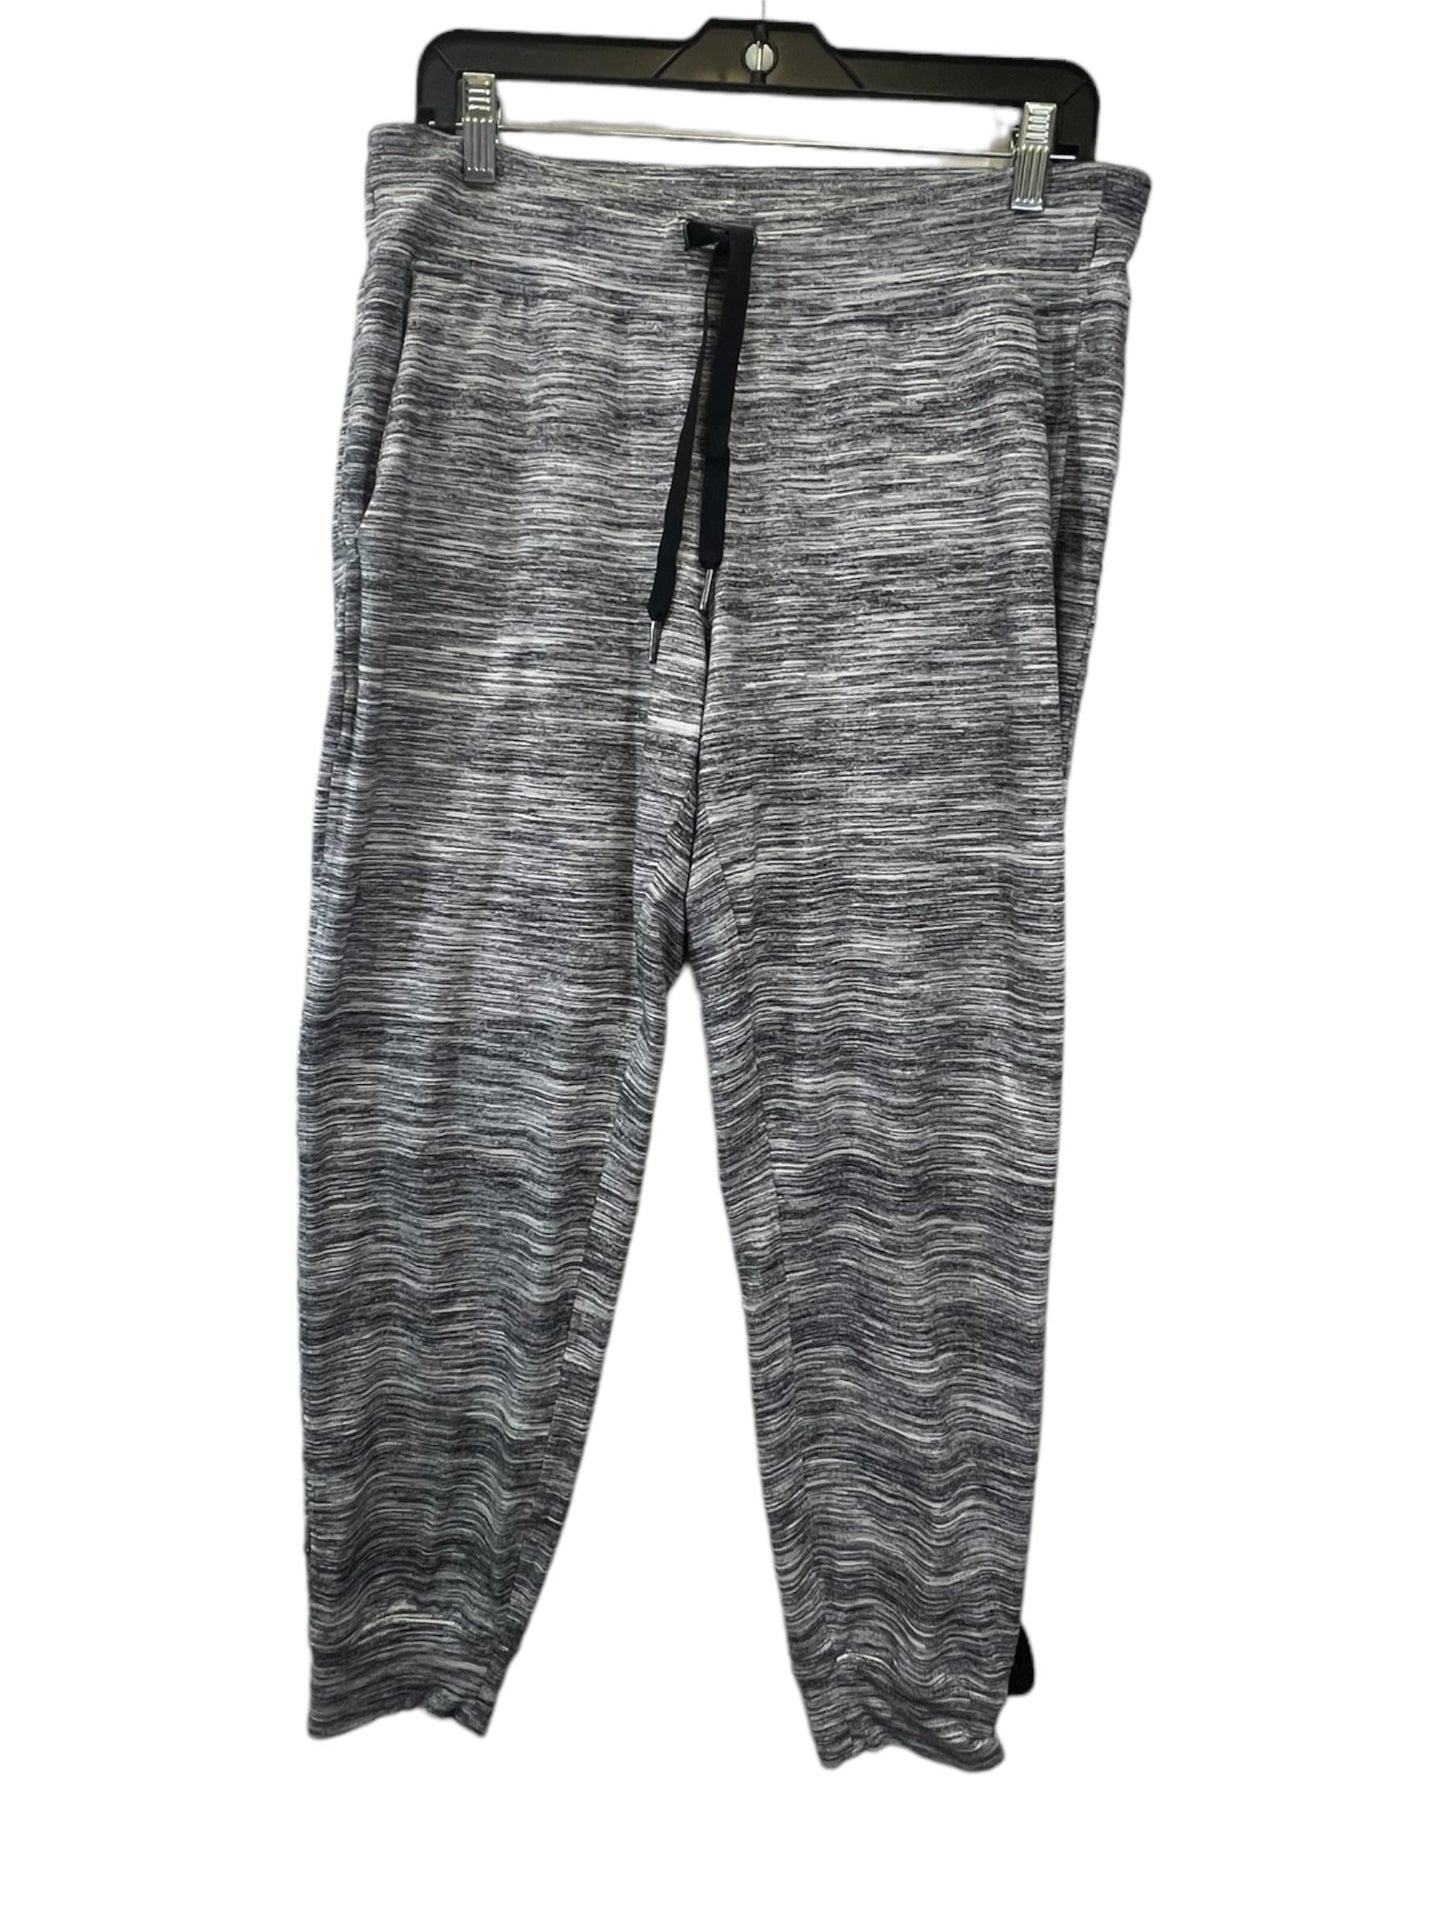 Grey & Silver Athletic Pants Lululemon, Size M